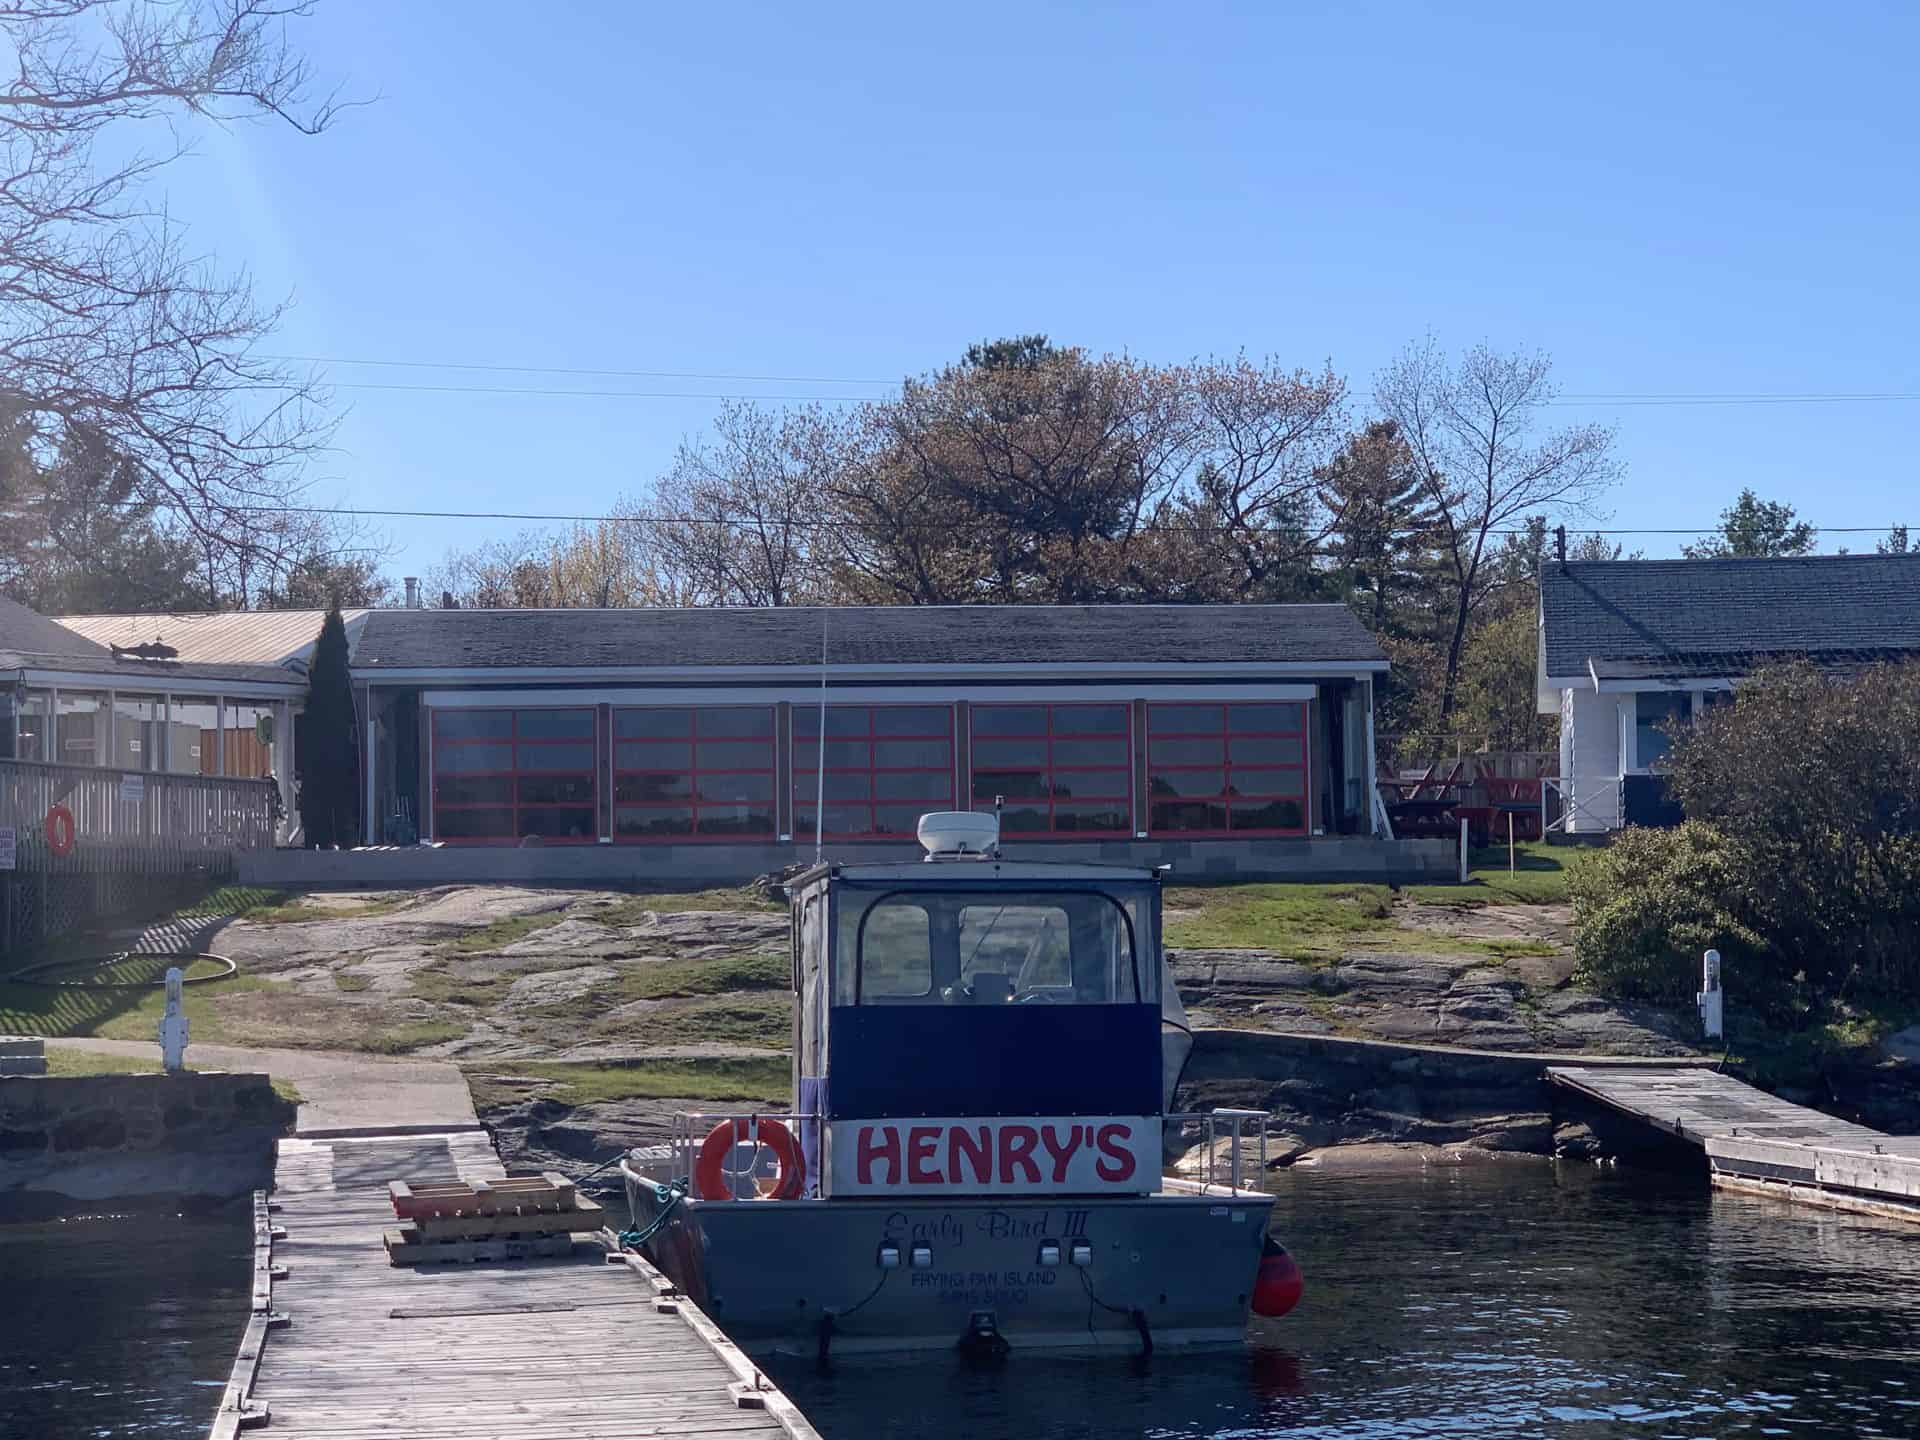 Henry’s Fish Restaurant